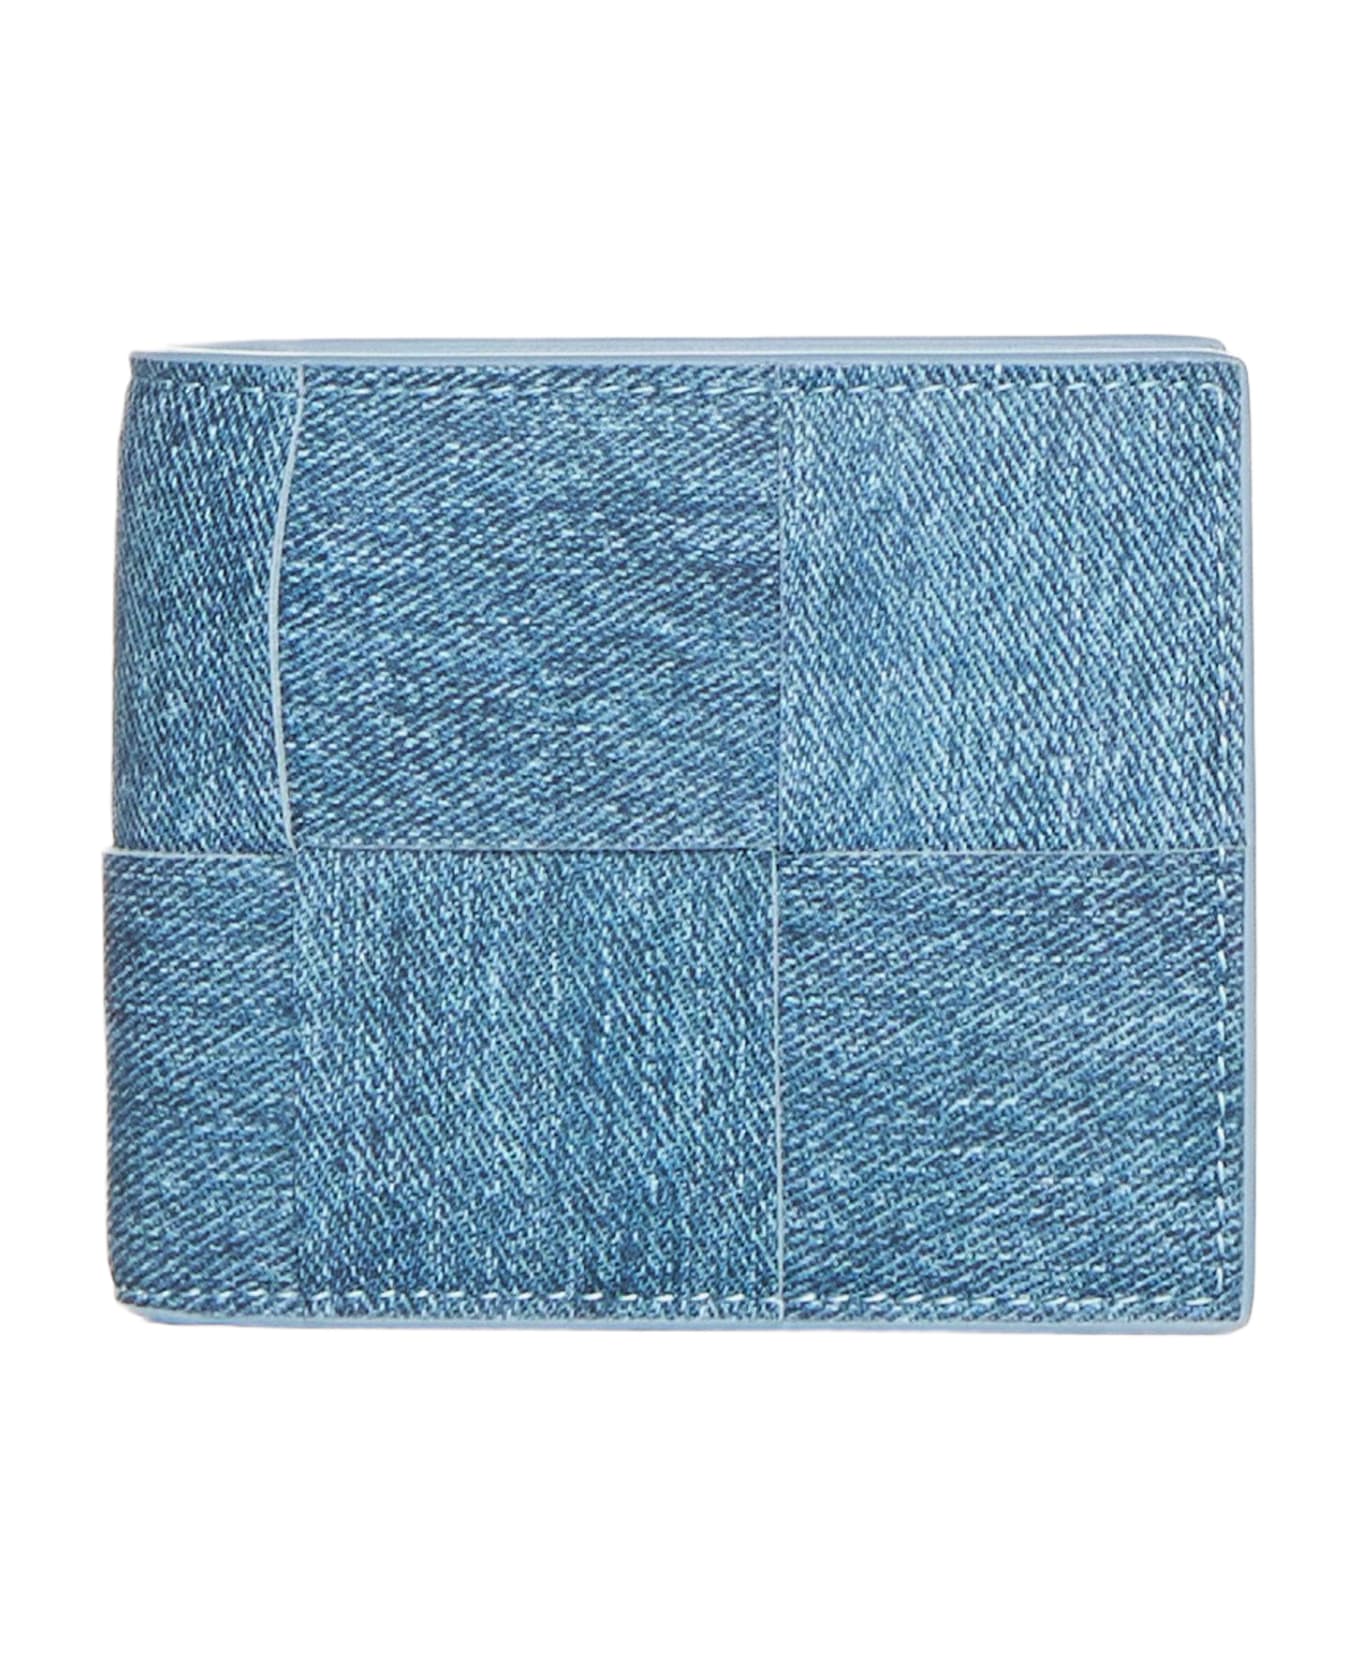 Bottega Veneta Cassette Leather Bifold Wallet - Clear Blue